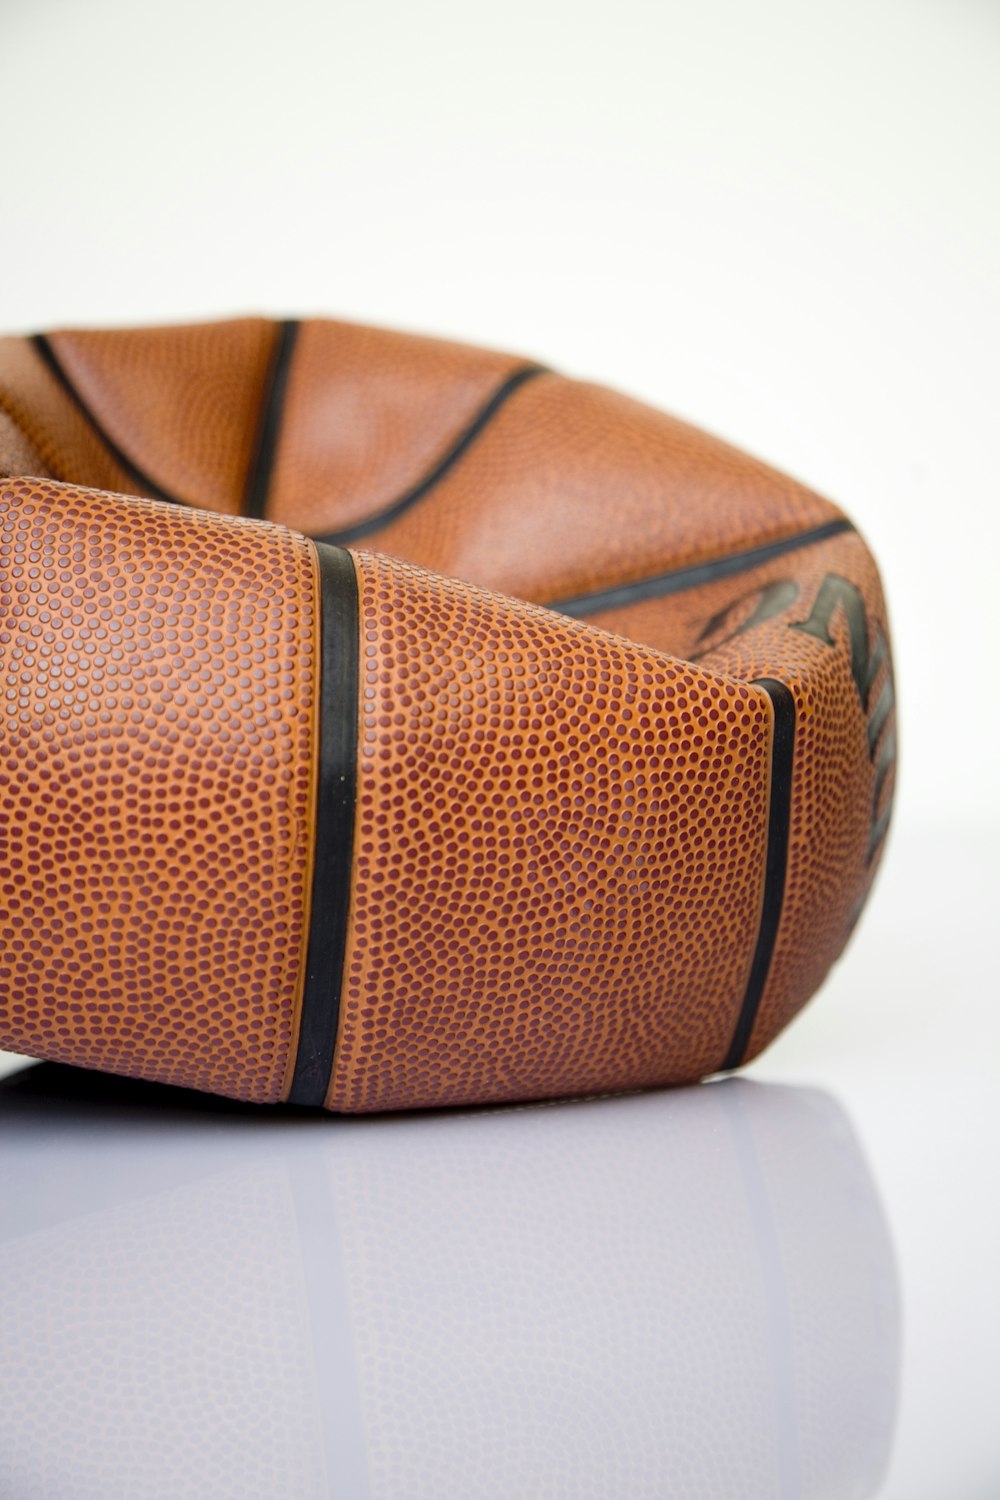 Pelota de baloncesto marrón sobre superficie blanca